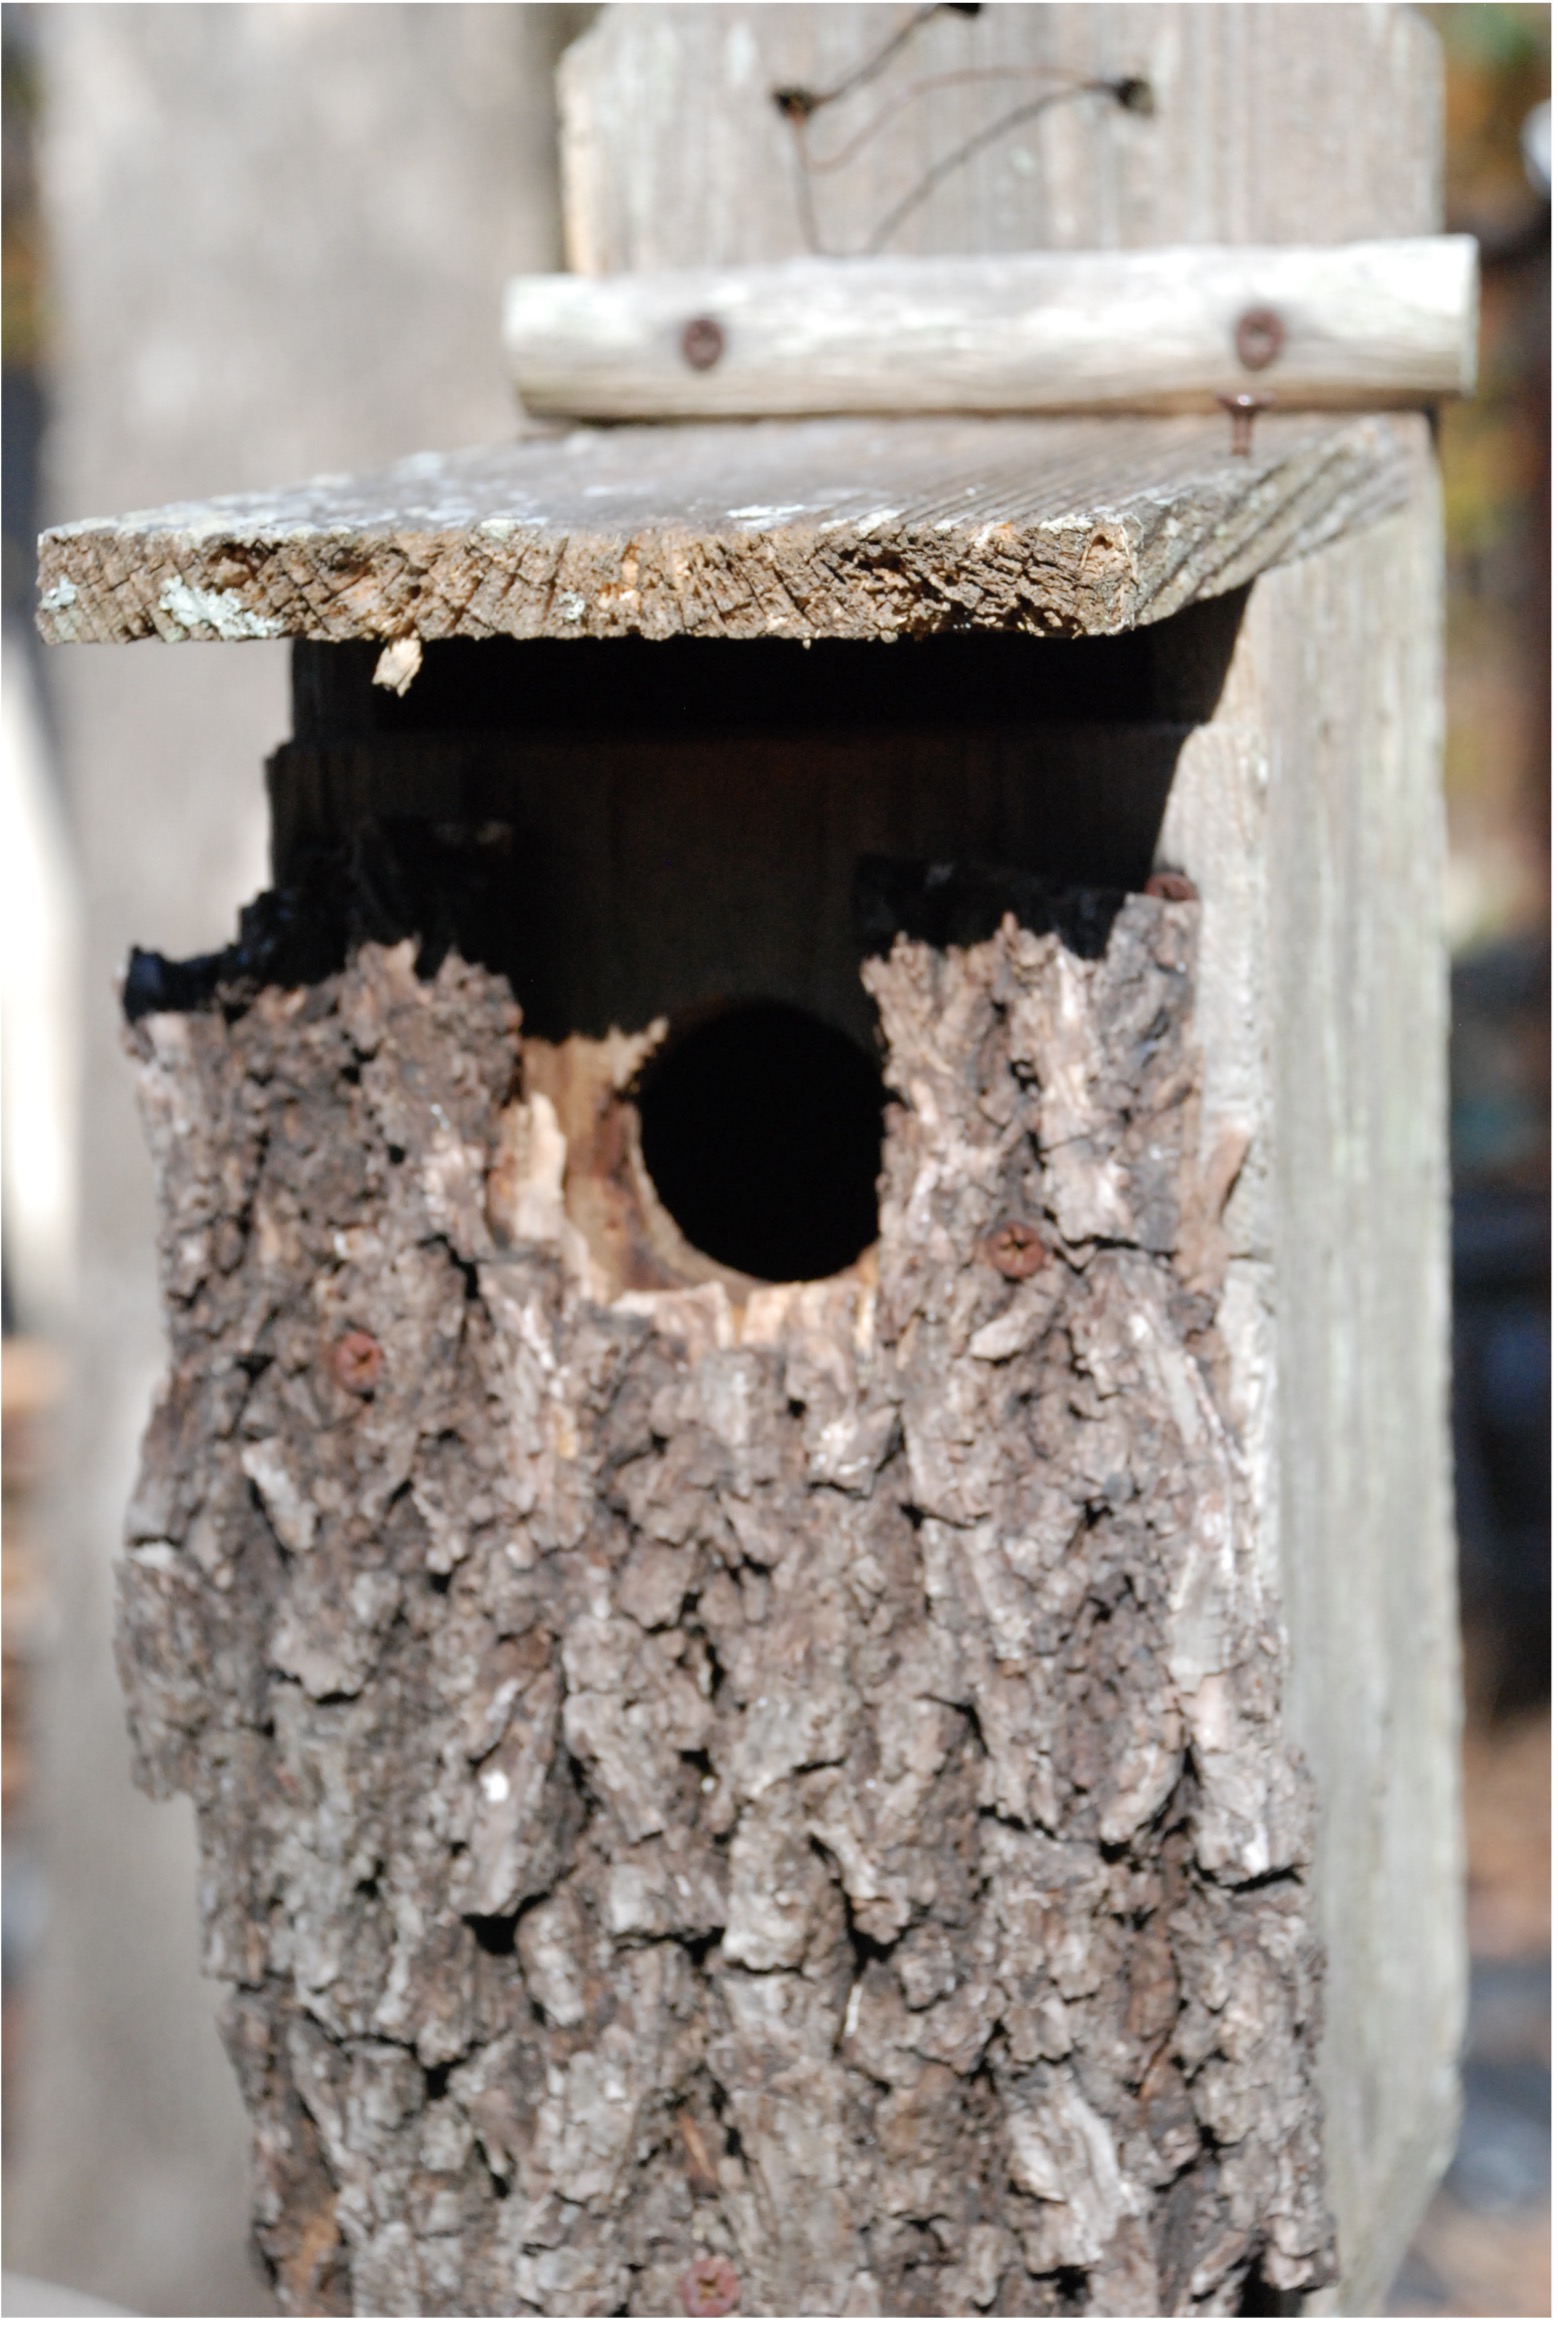 Bark nest box, photo by Jerry Wayne Davis